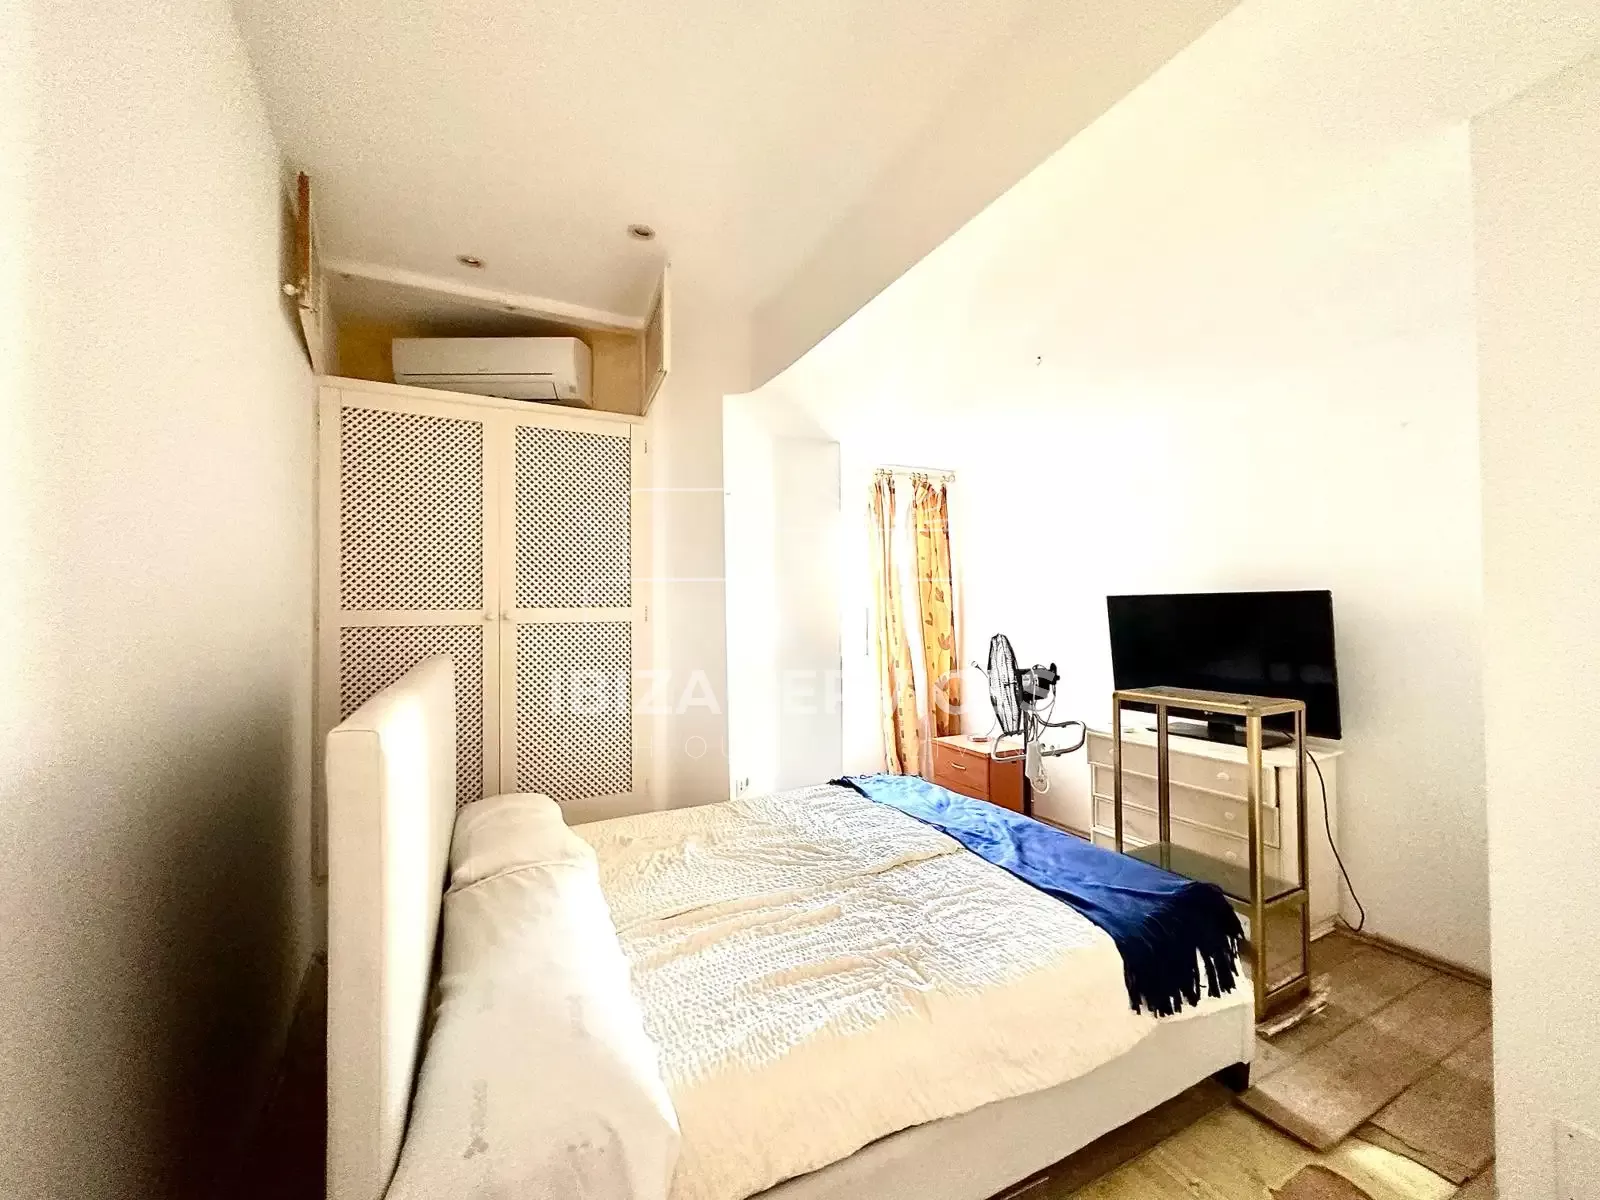 Duplex in Talamanca, 3 bedroom, Seasonal Rental.